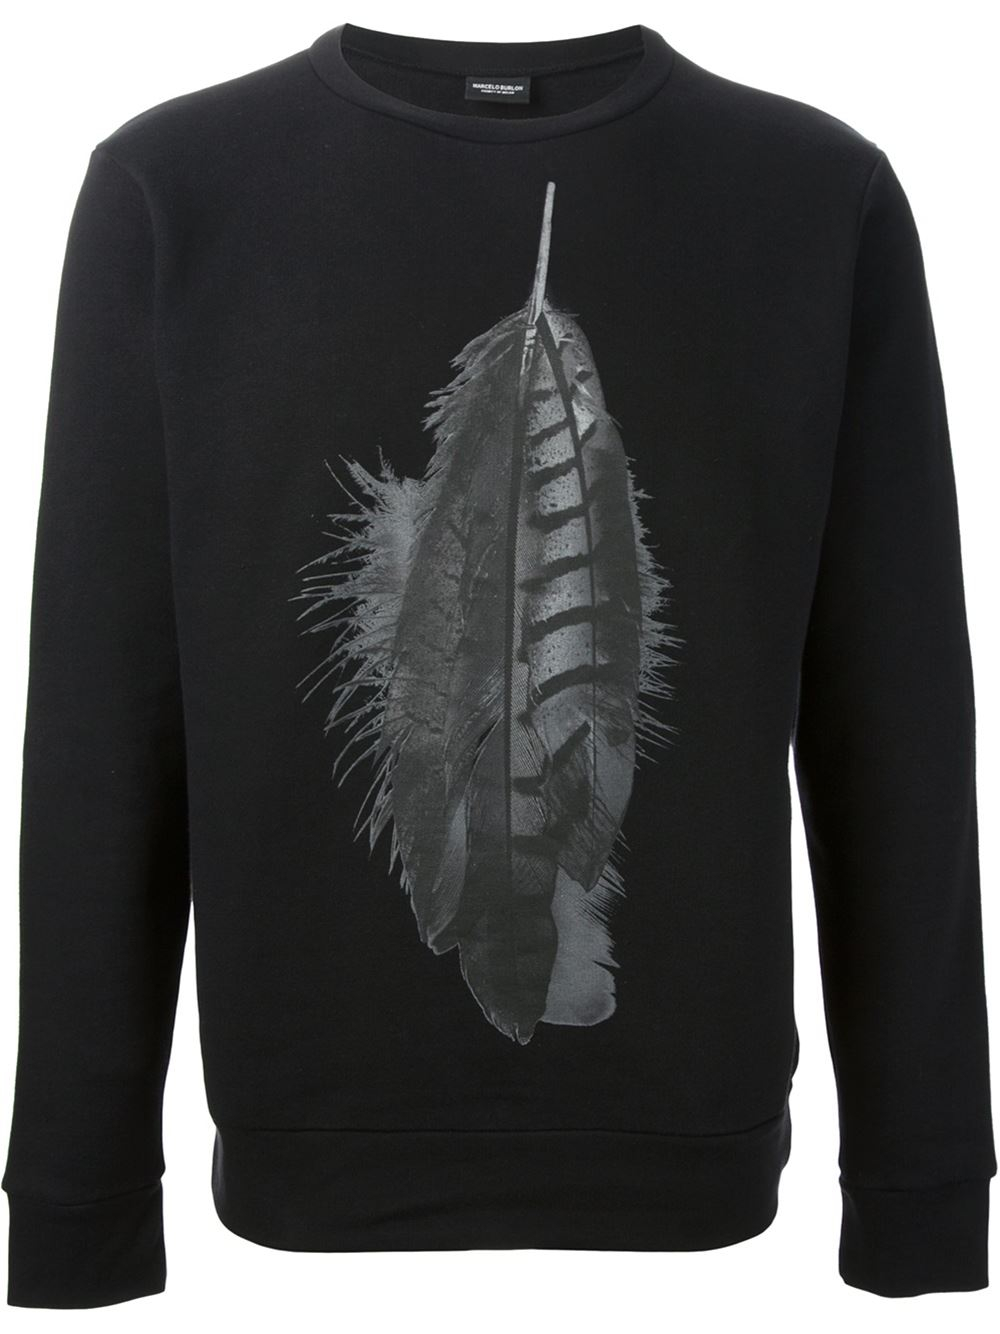 Lyst - Marcelo Burlon Feather Print Sweatshirt in Black for Men